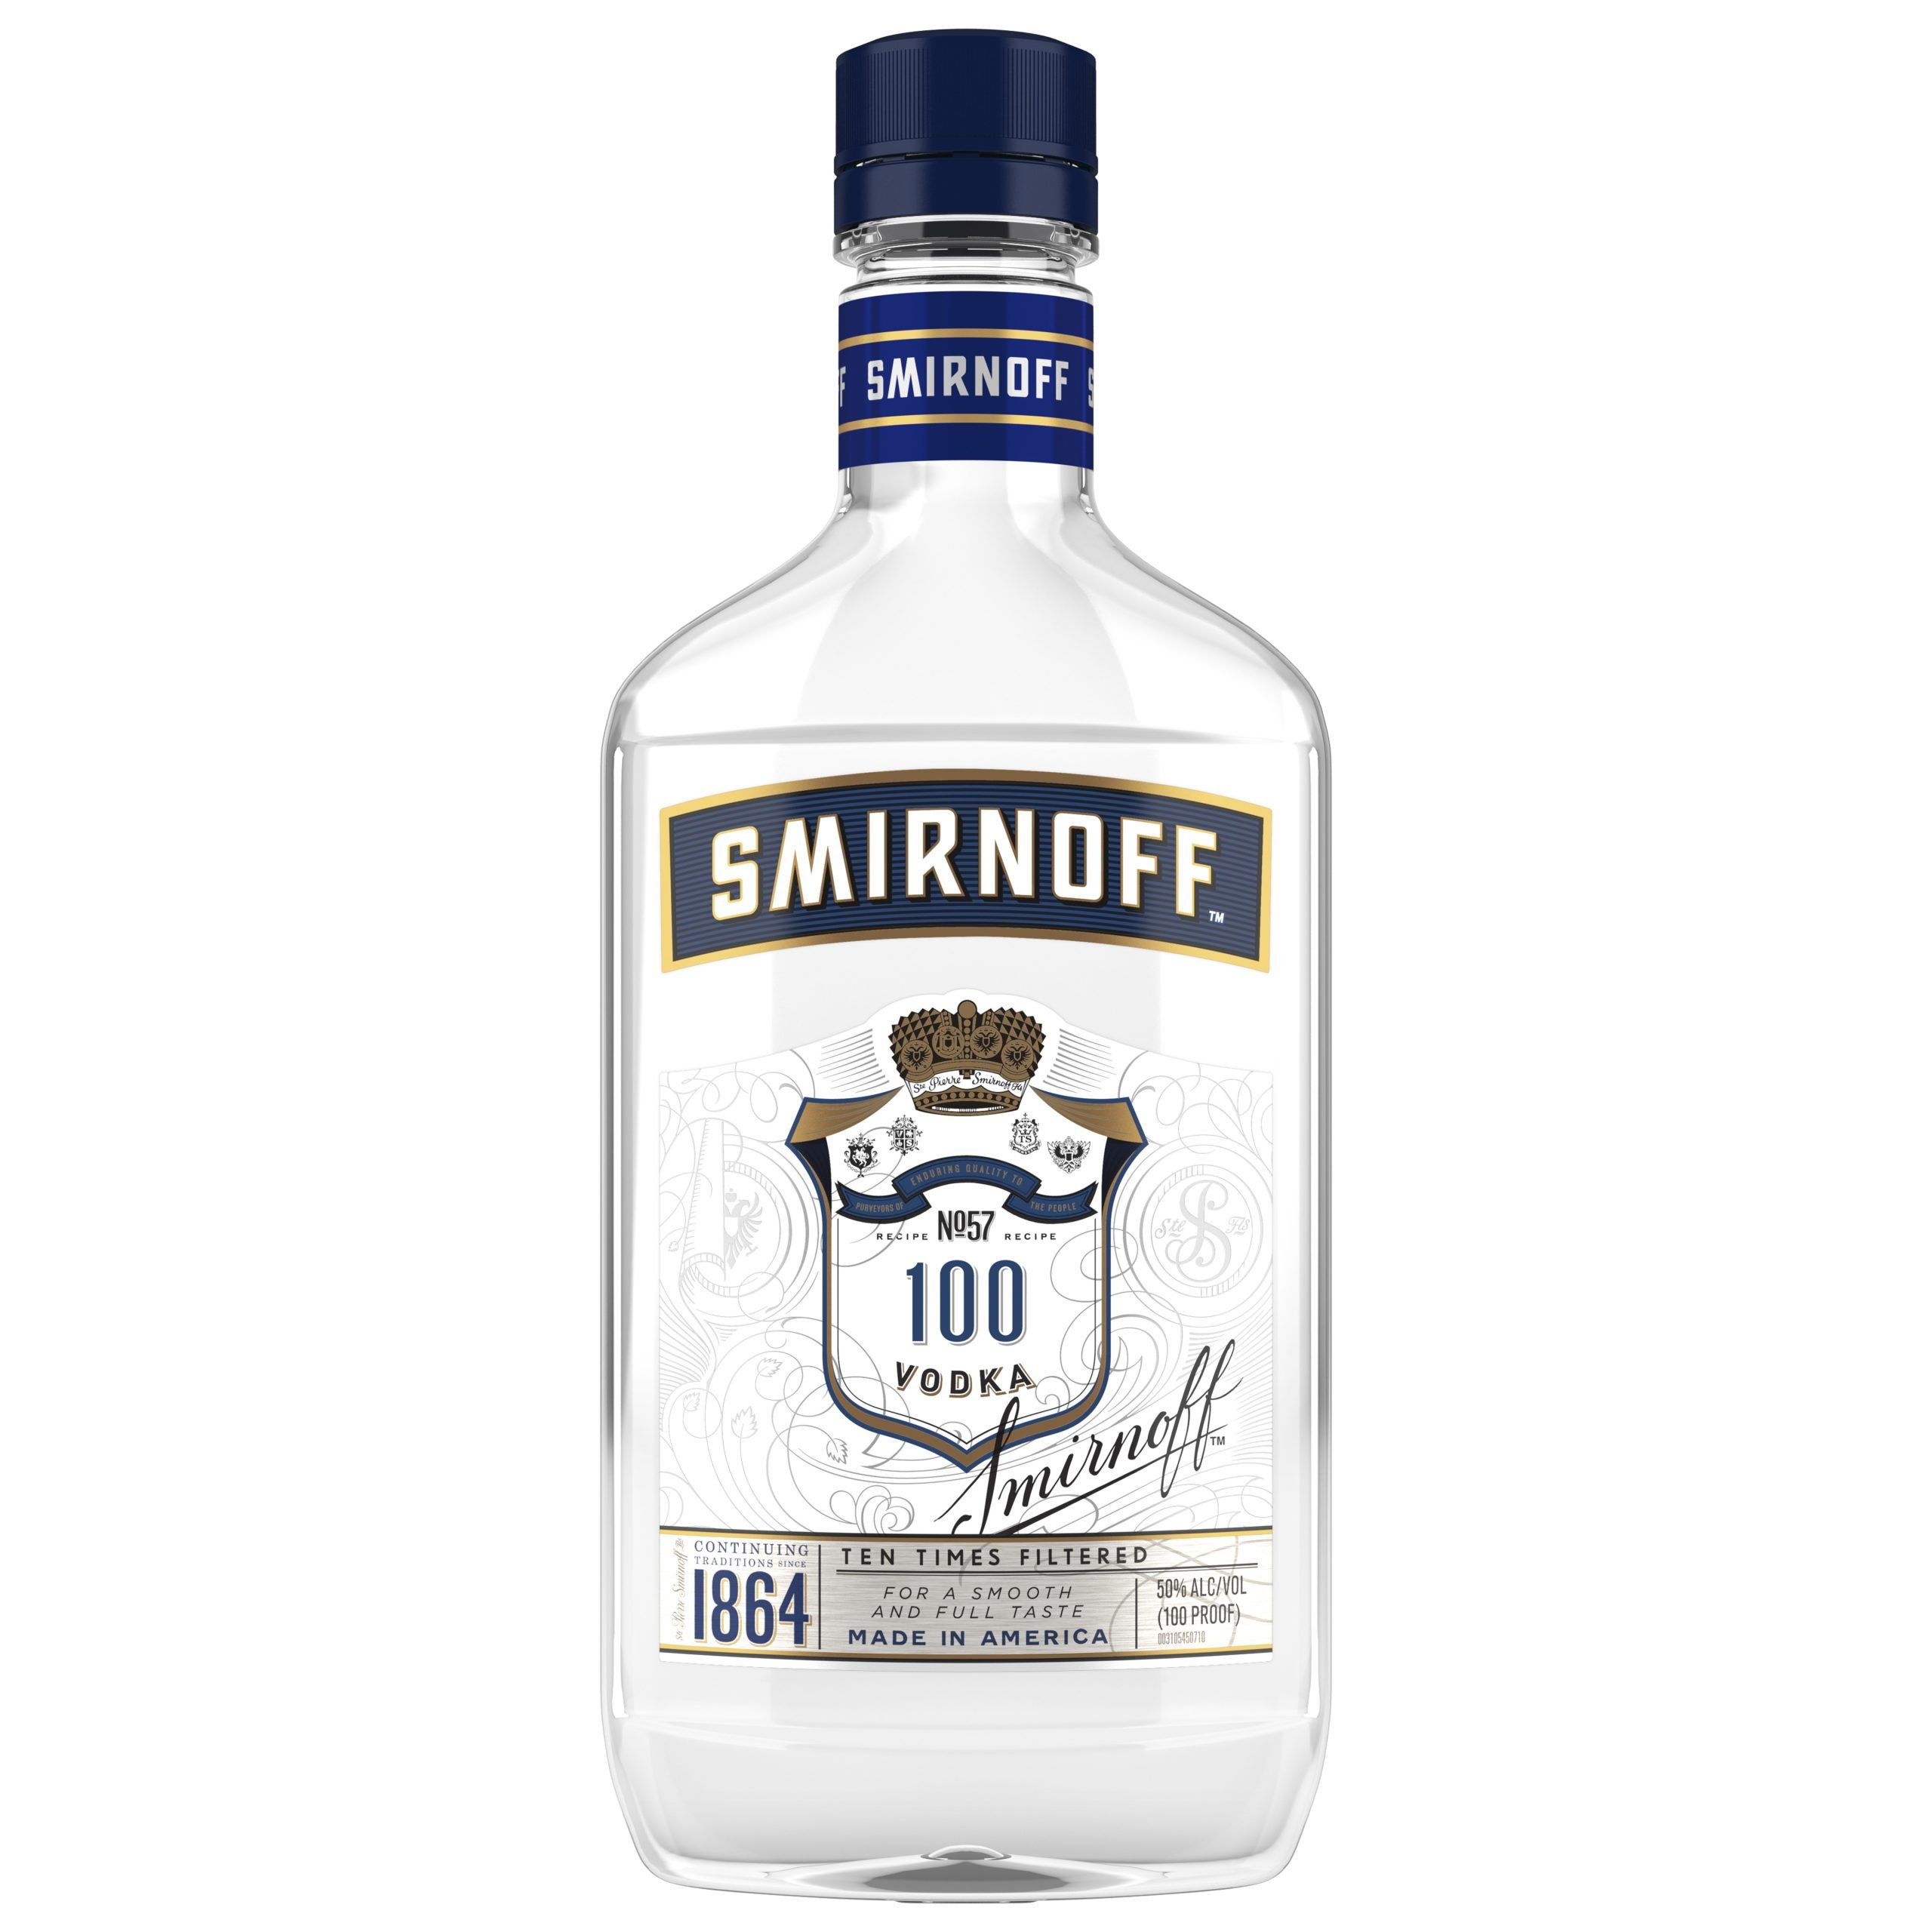 Smirnoff Blue No. 57 100 Proof Vodka, 375 mL